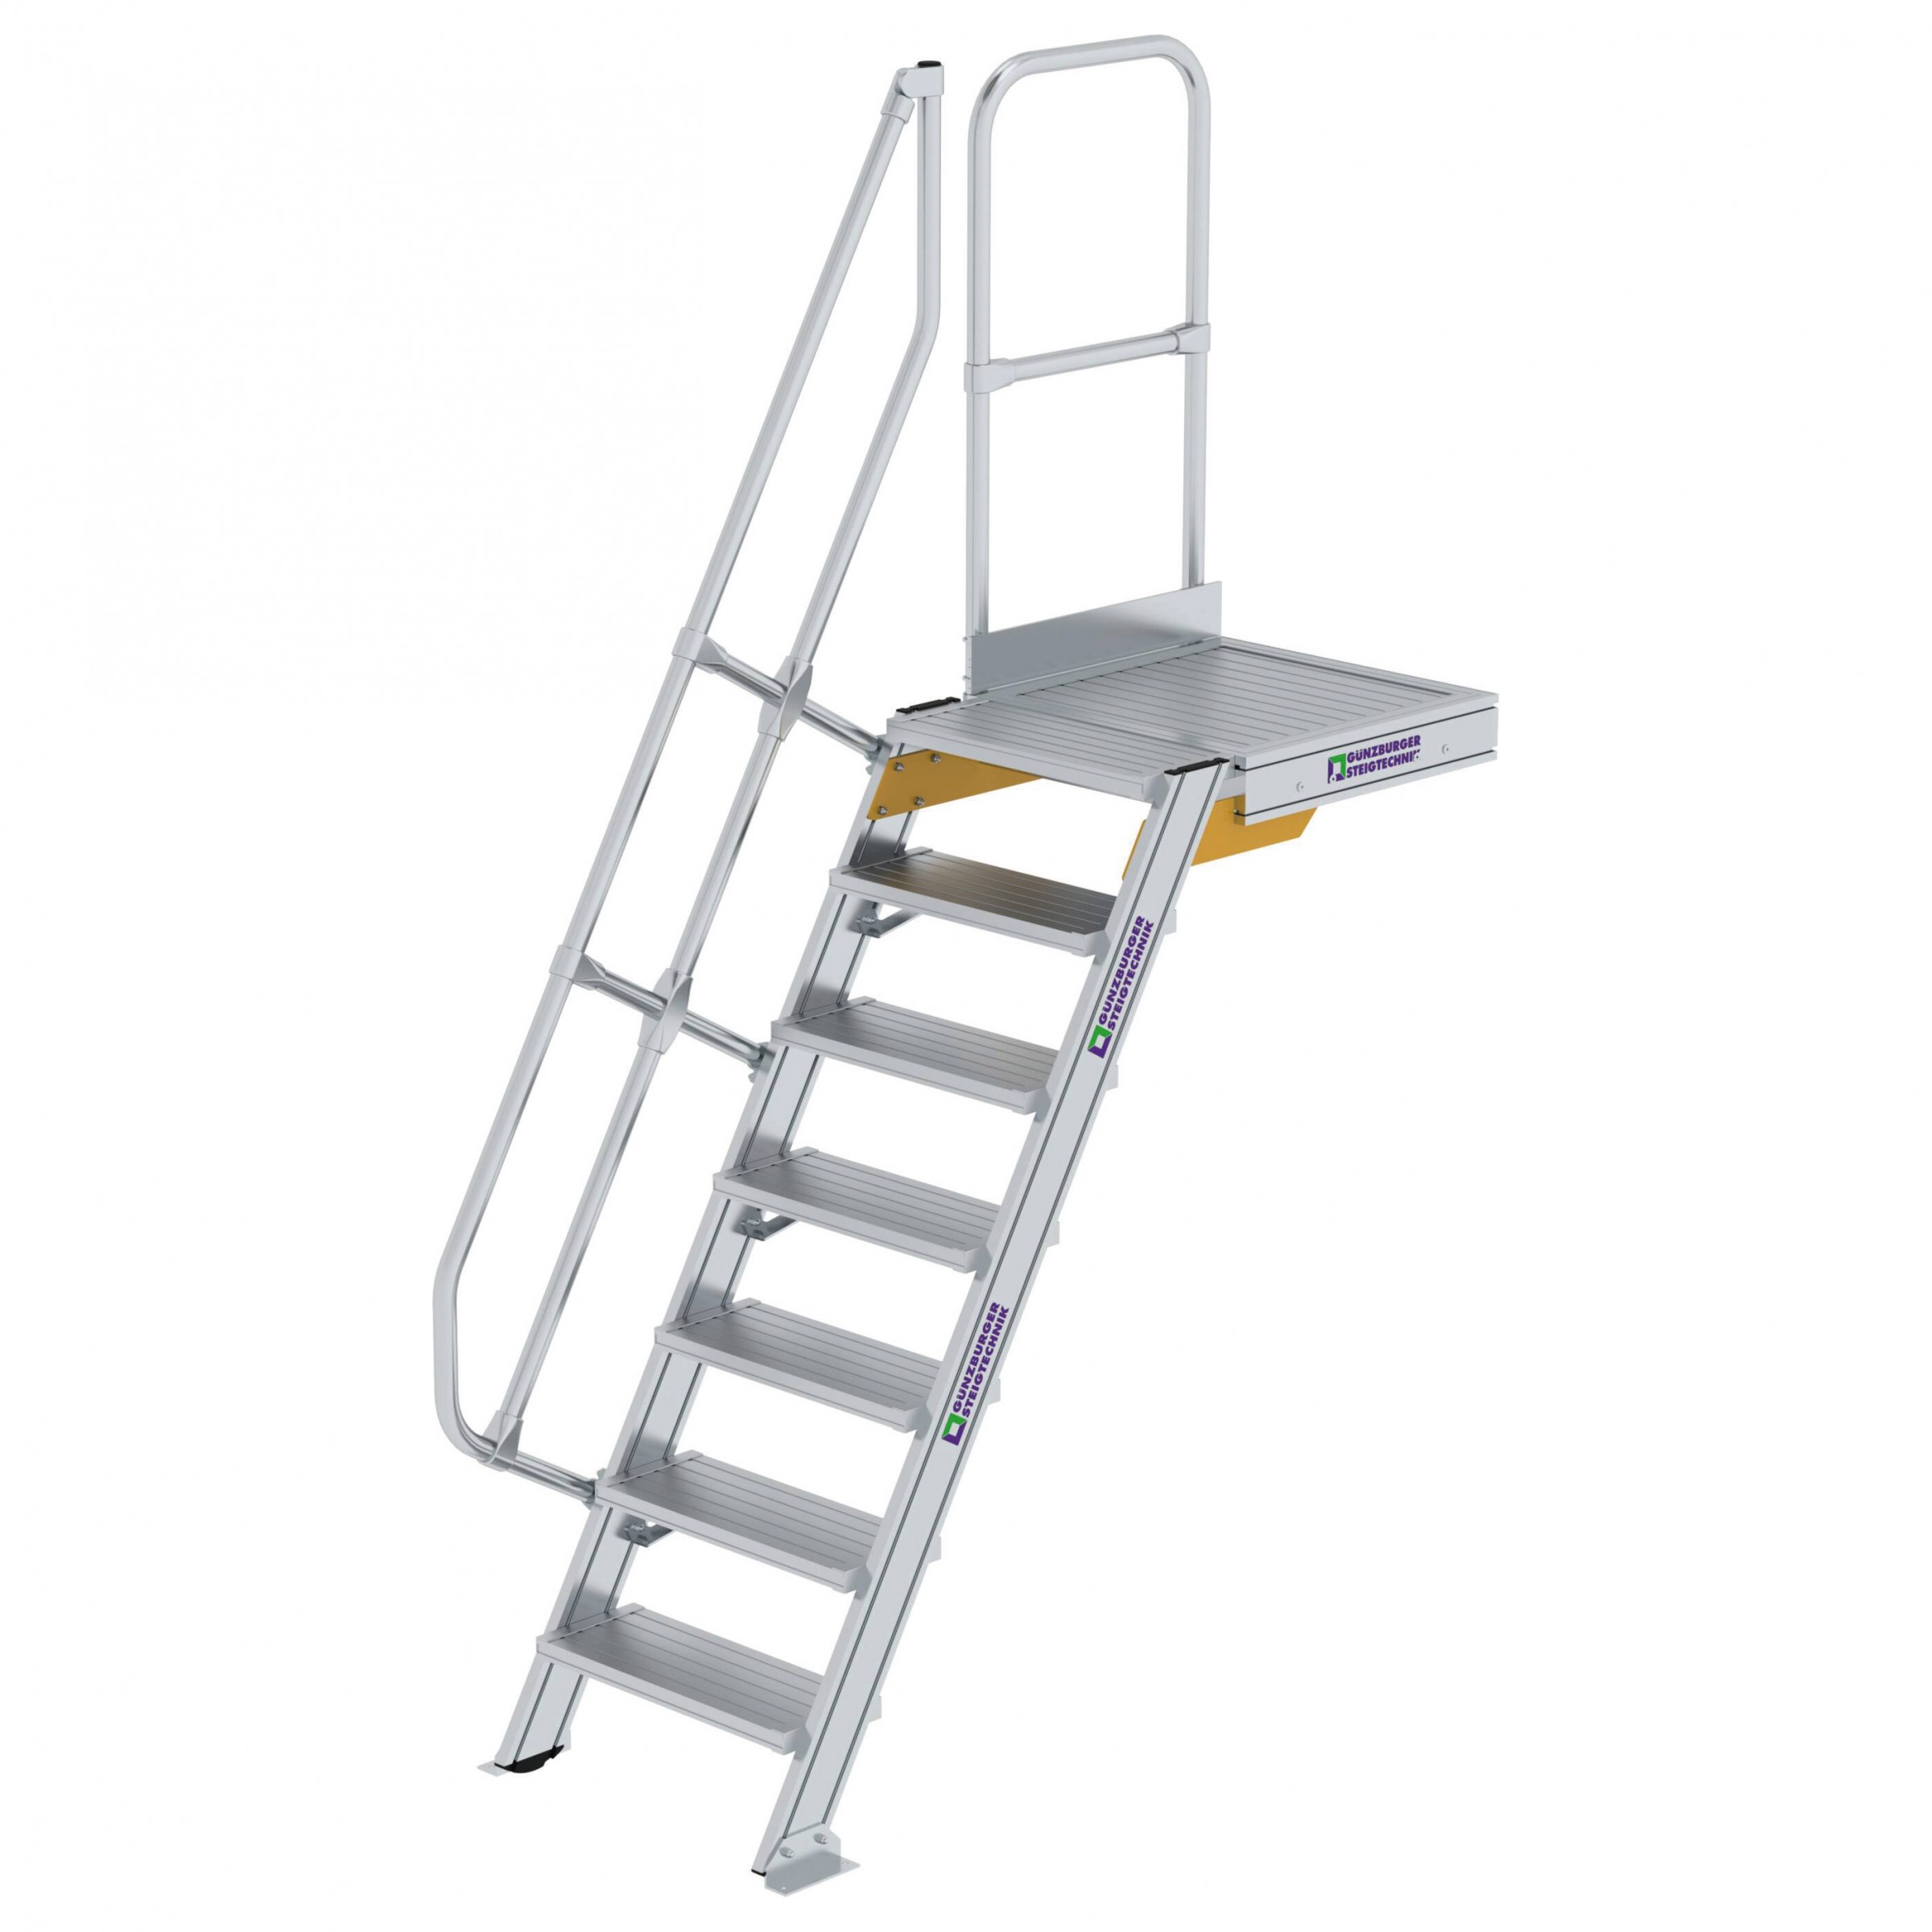 Aluminium-Treppe 60° mit Podest, Stufenbreite 600 mm, 4 Stufen